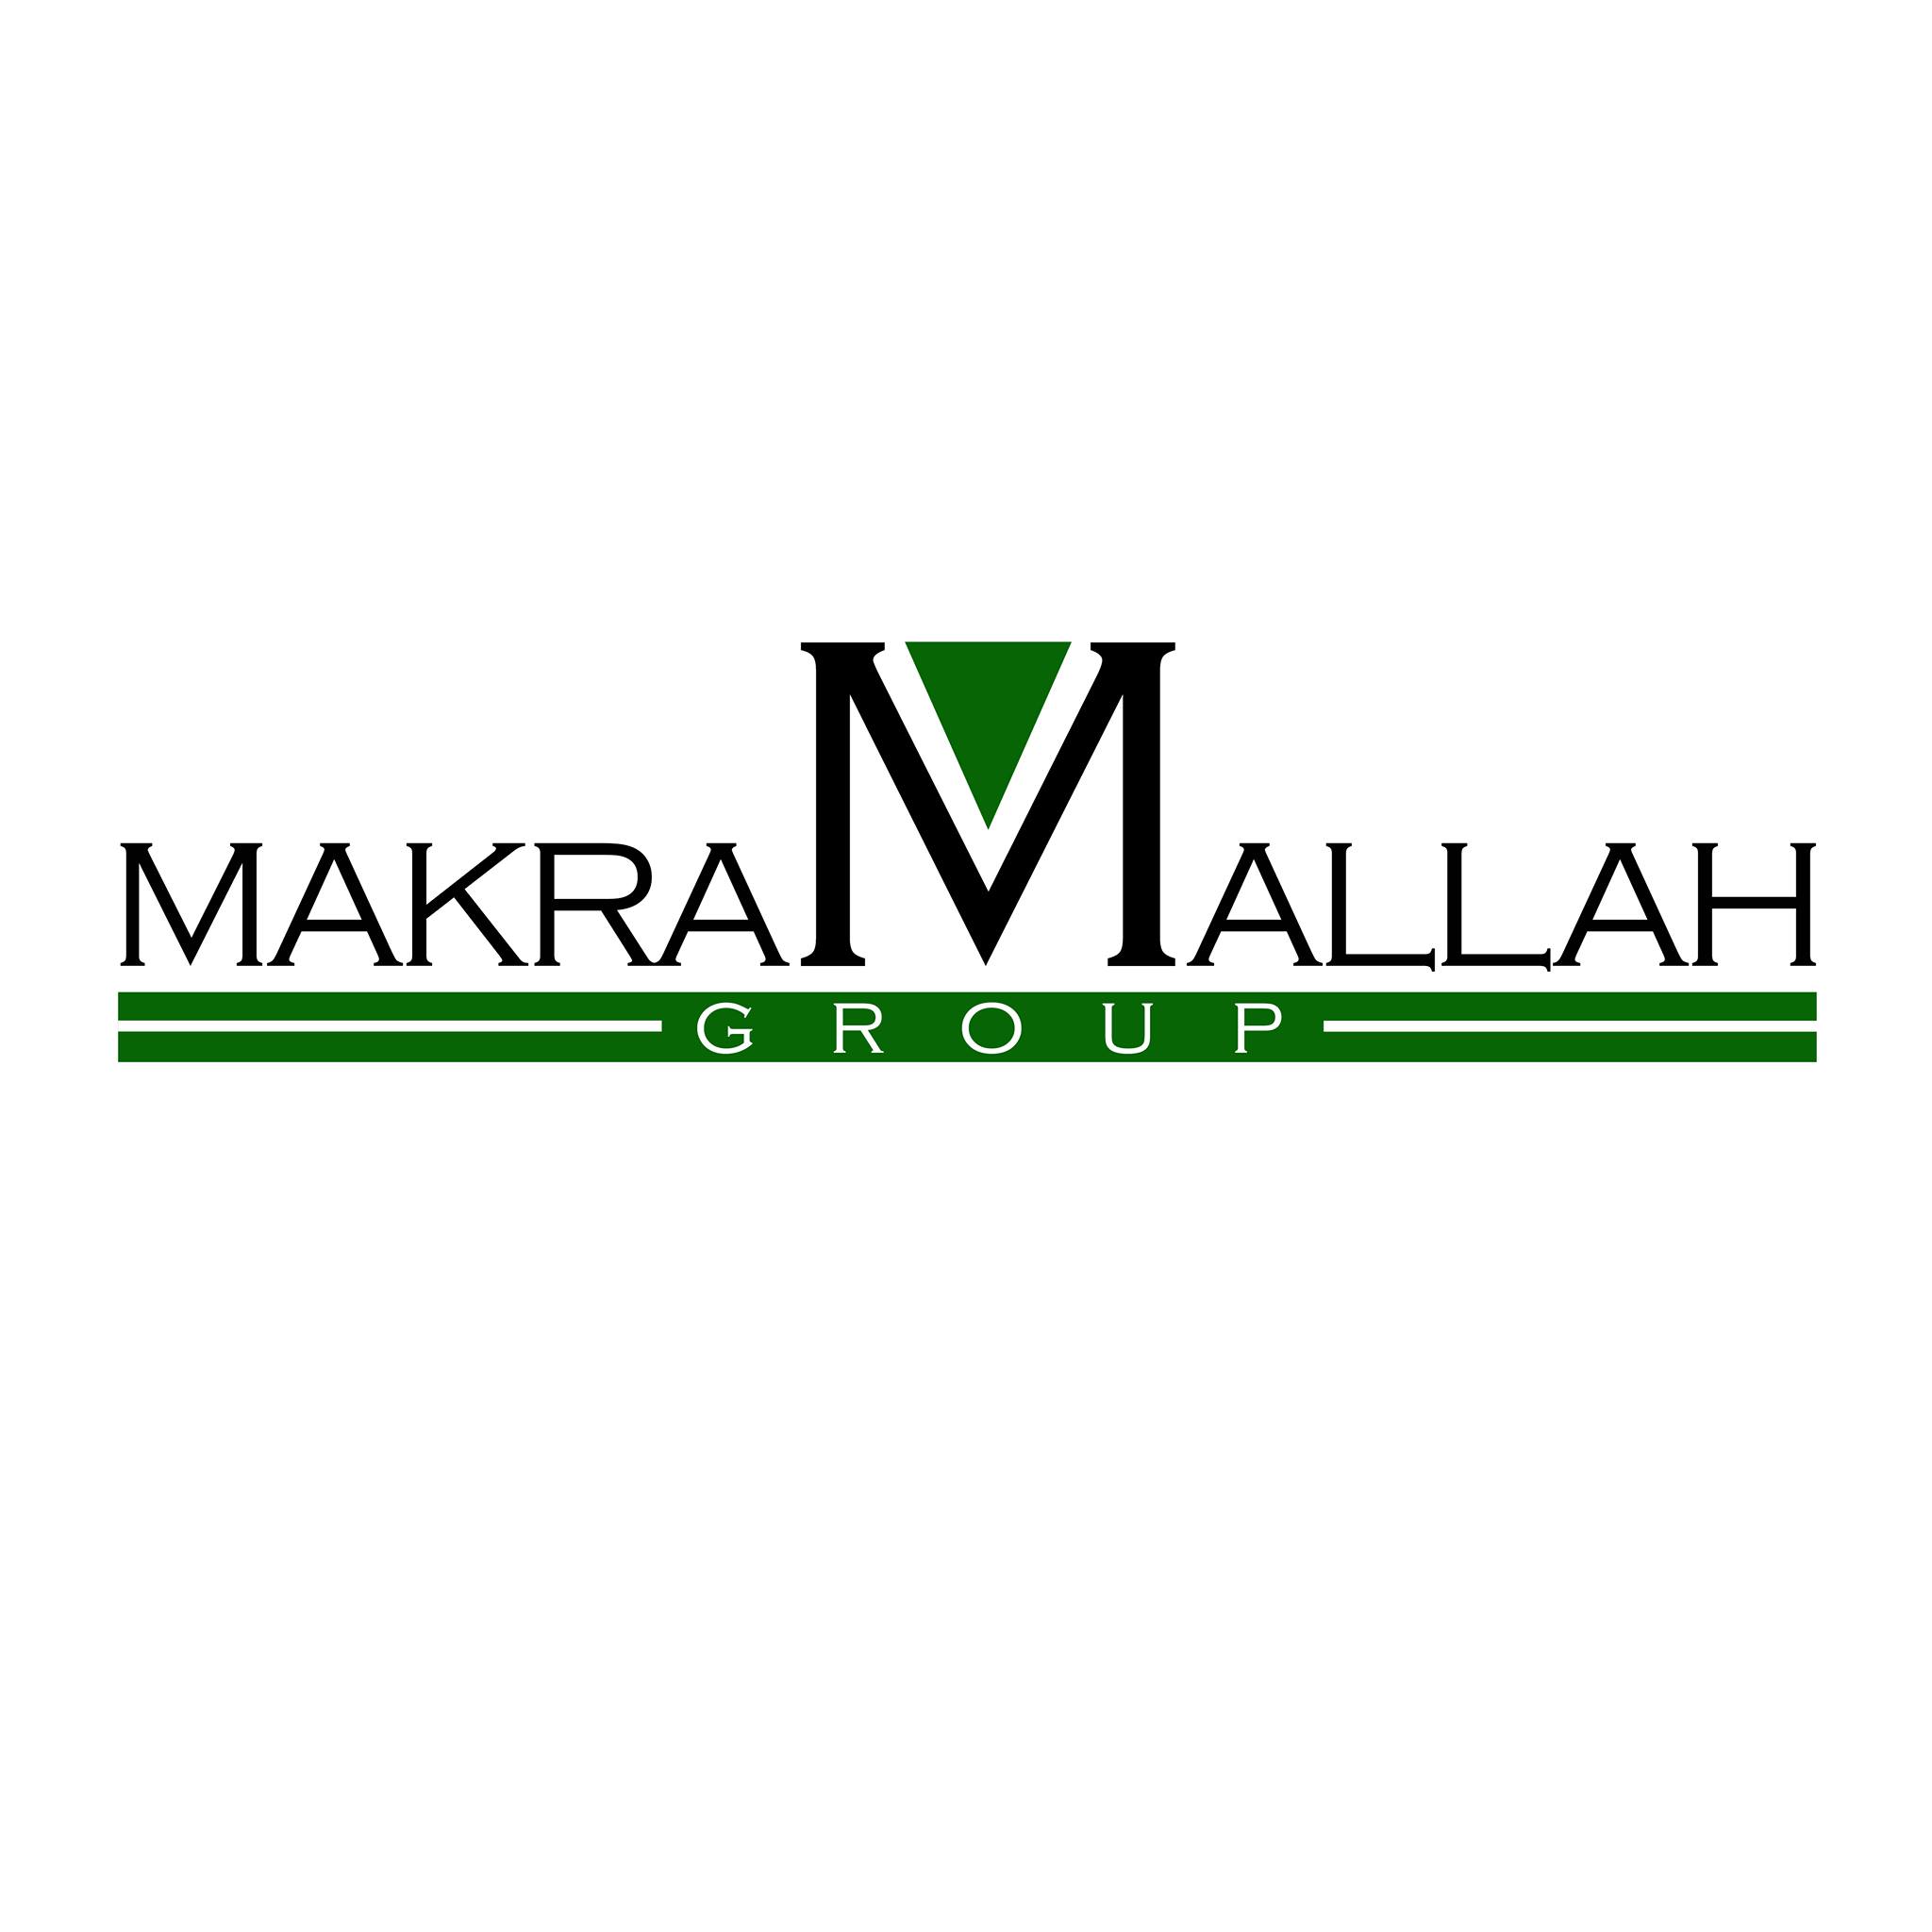 Makramallah Group